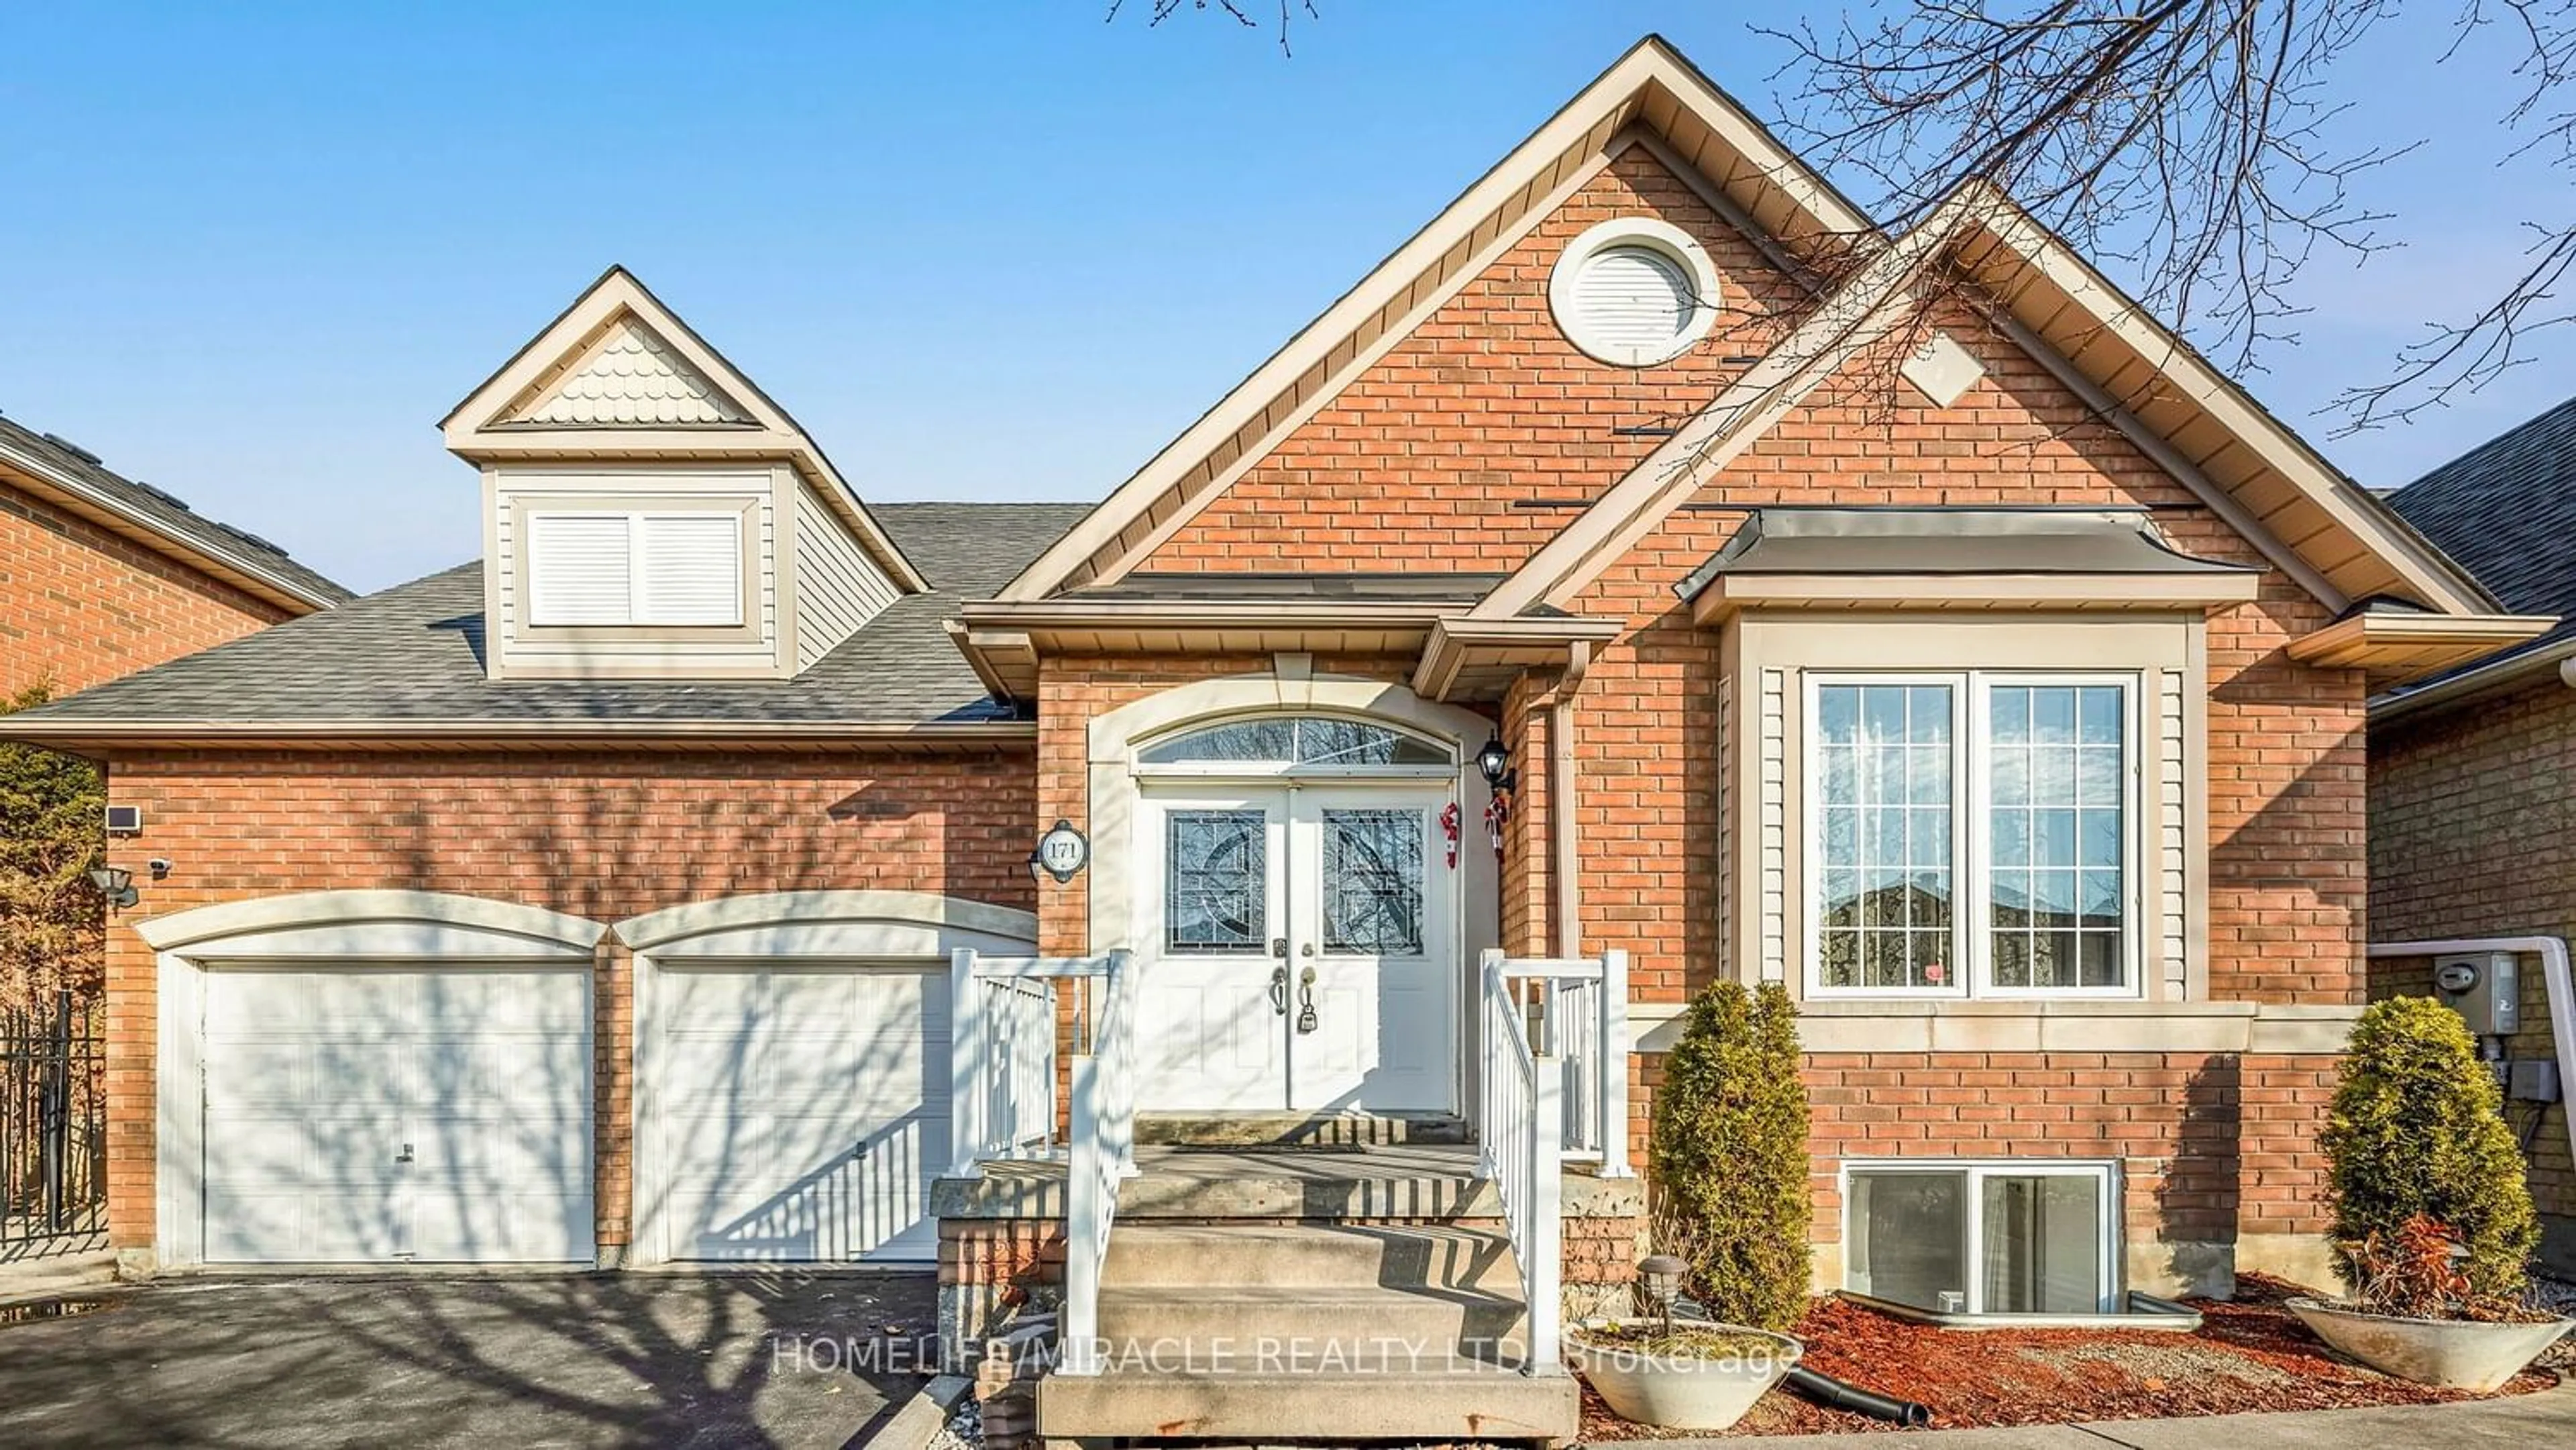 Home with brick exterior material for 171 Edenbrook Hill Dr, Brampton Ontario L7A 2C1